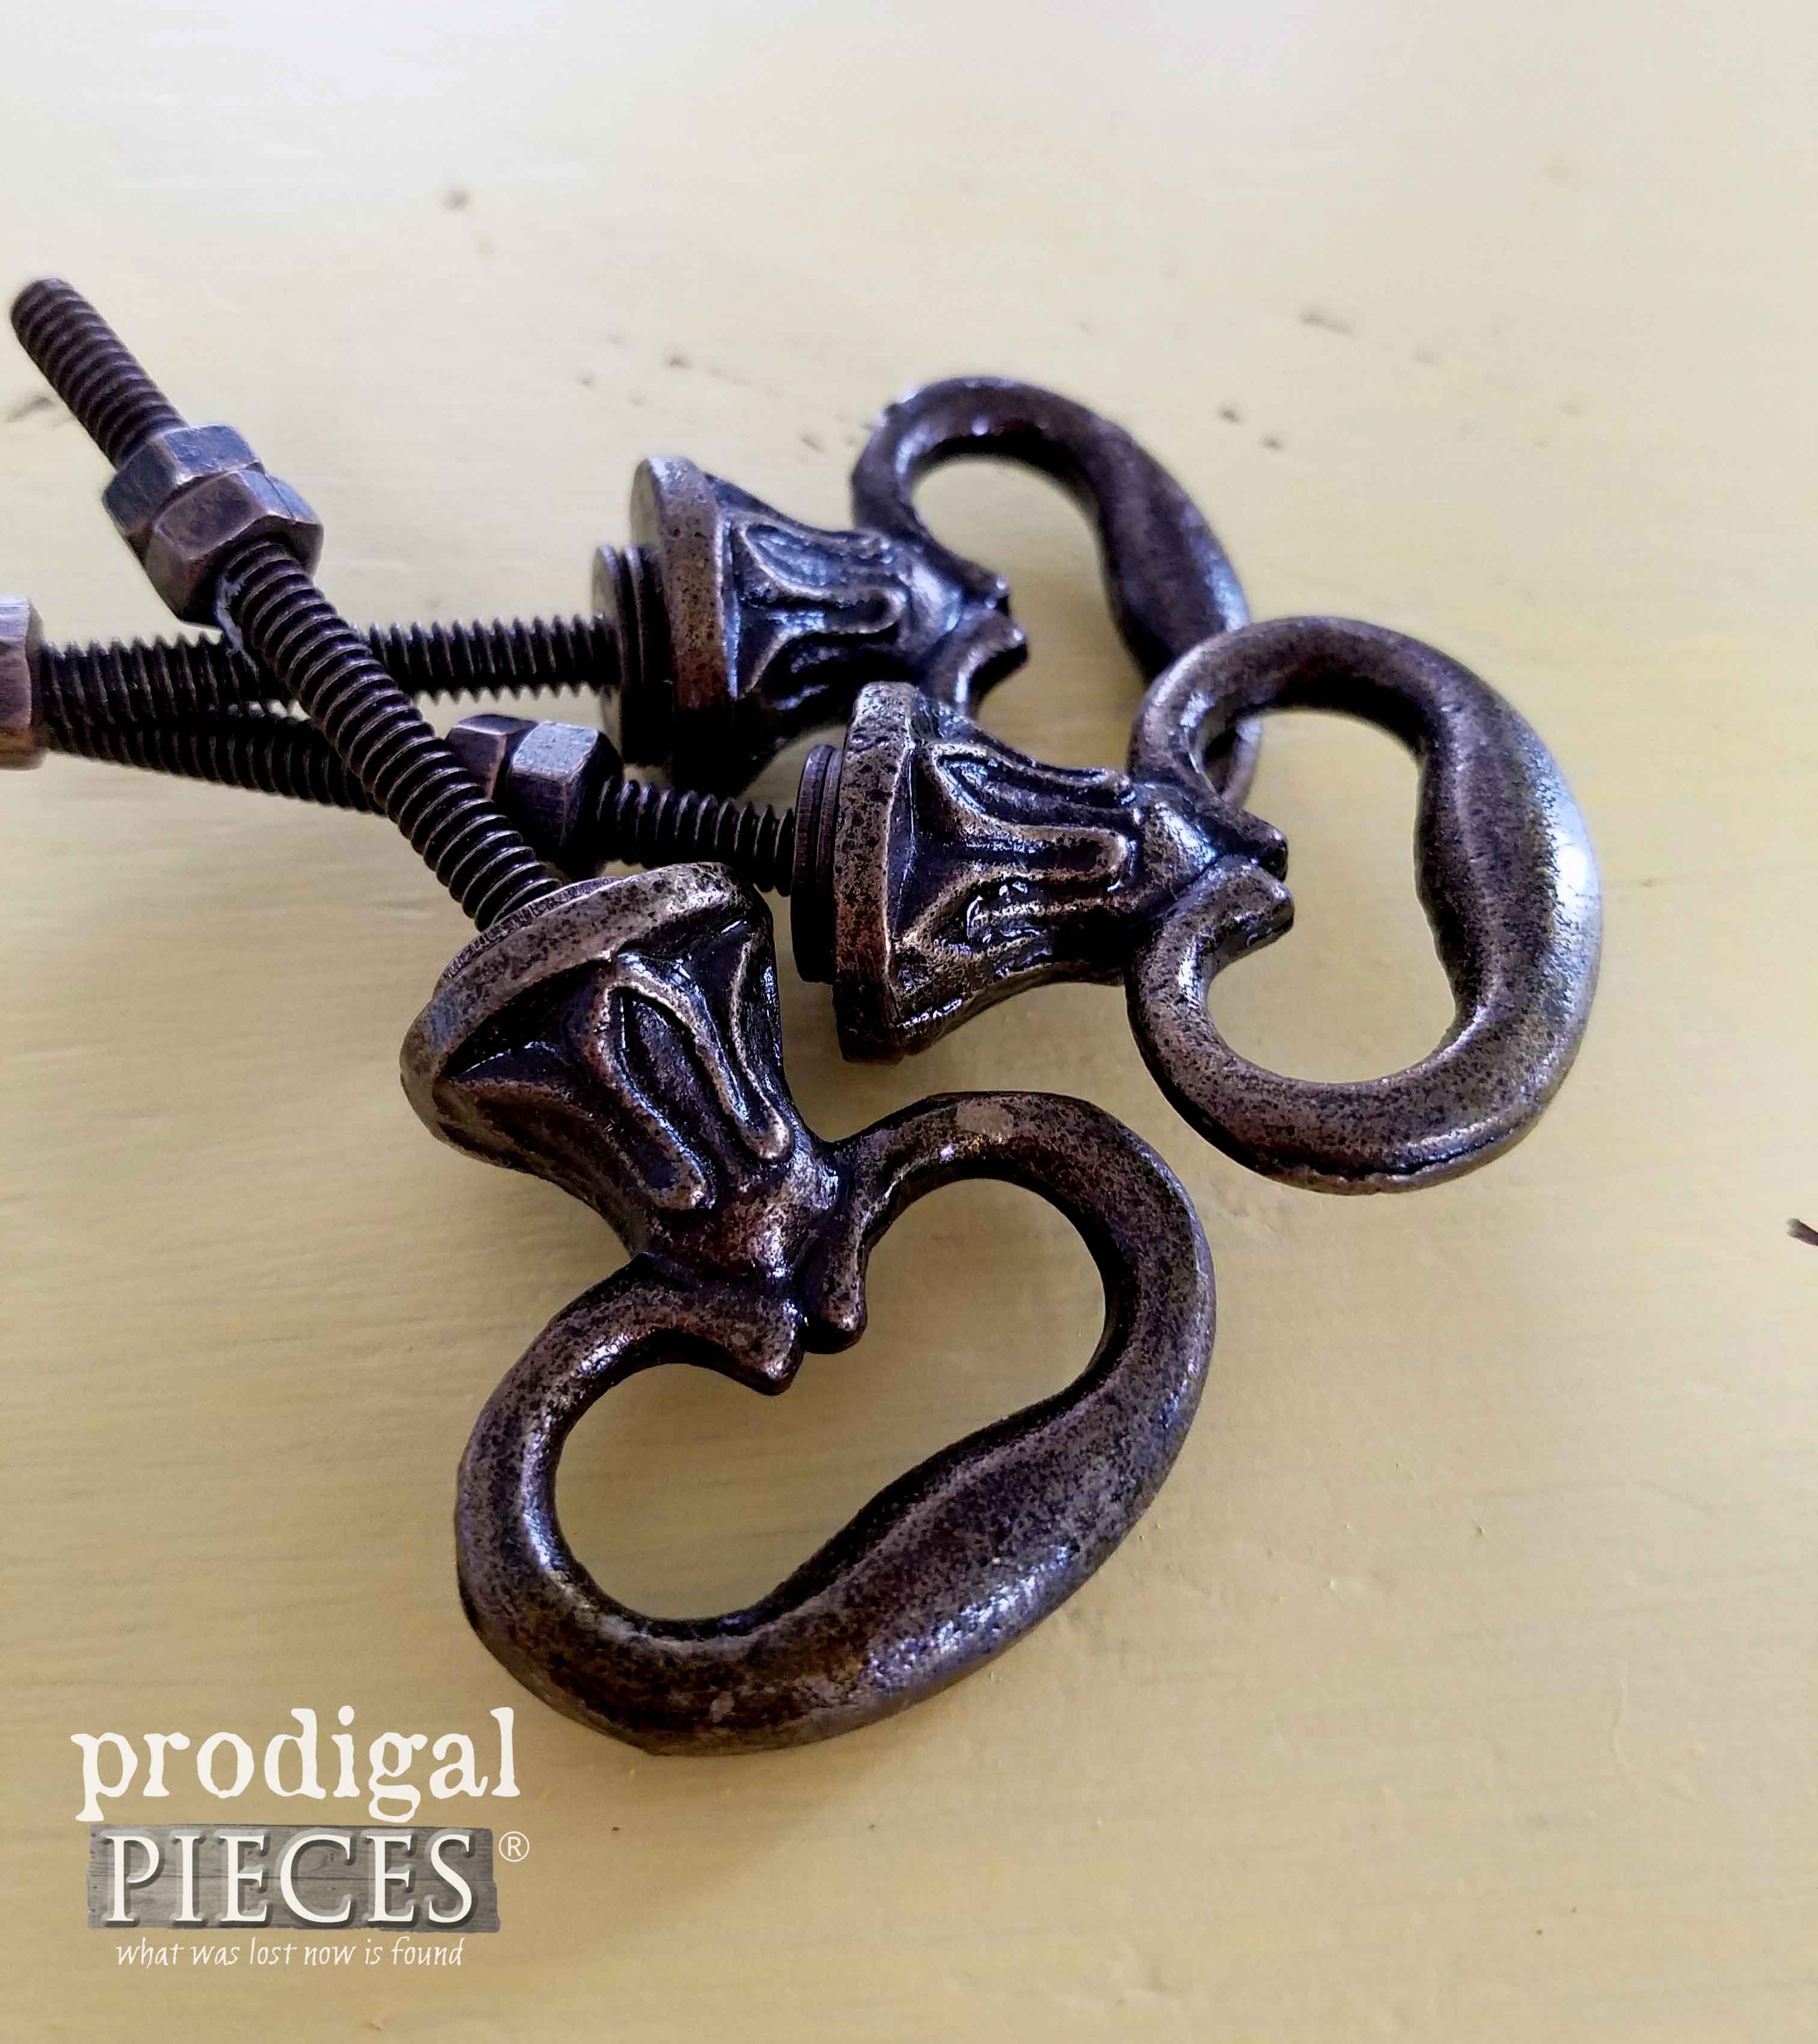 Replica Antique Key Hardware by Rustic Brands | Prodigal Pieces | prodigalpieces.com